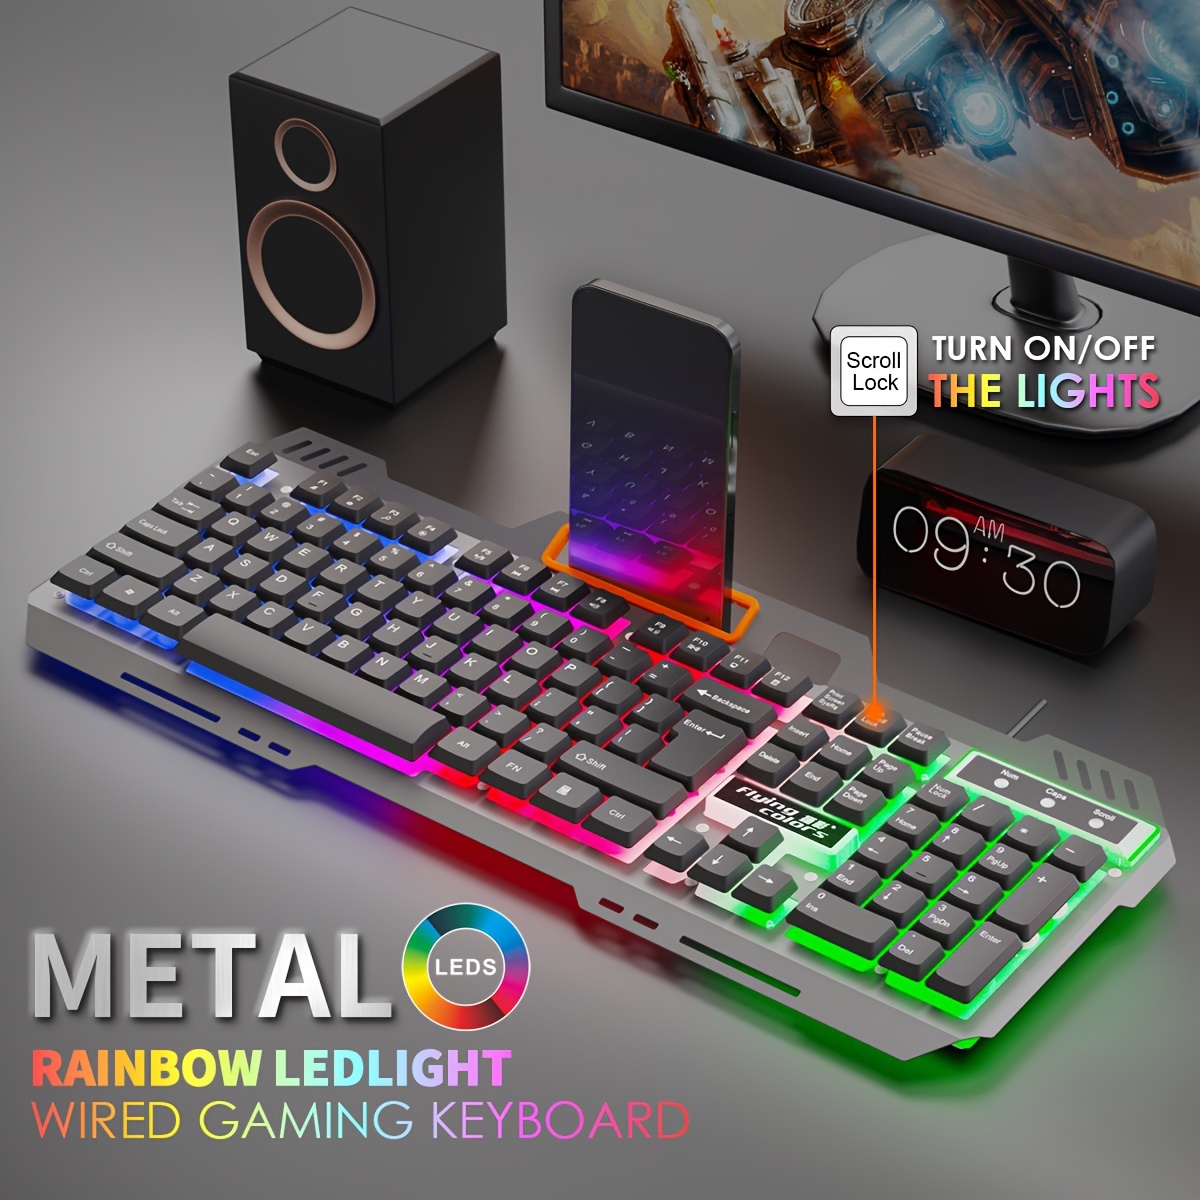 

Wired Usb Interface, Metal Panel Rainbow Backlight, 104-key Multimedia Lighting Keyboard, Gaming Keyboard